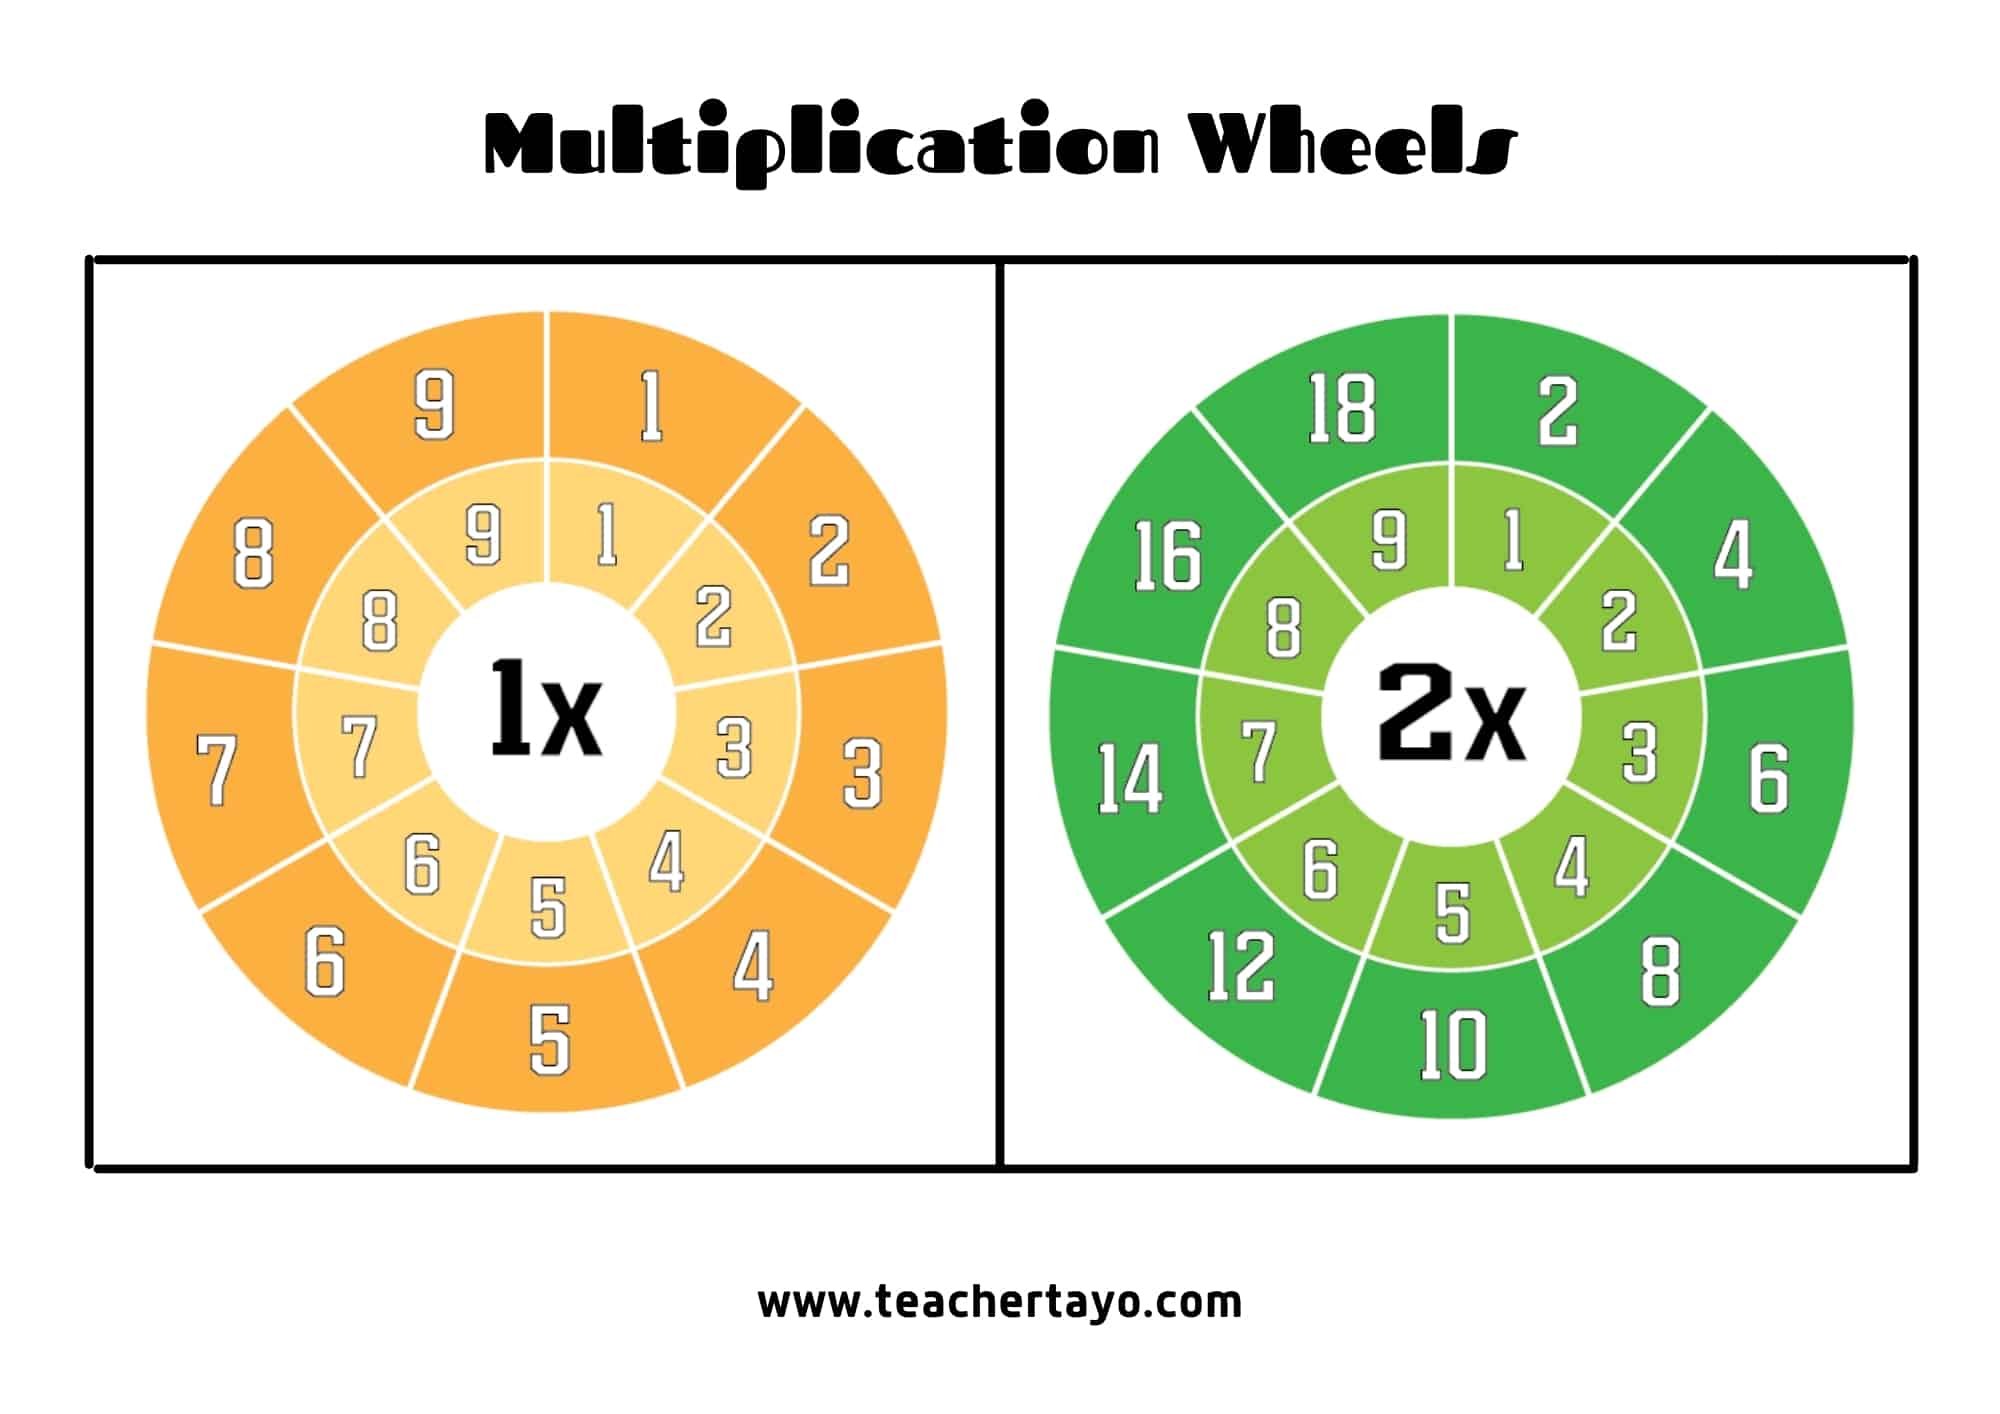 multiplication-wheels-free-learning-materials-teacher-tayo